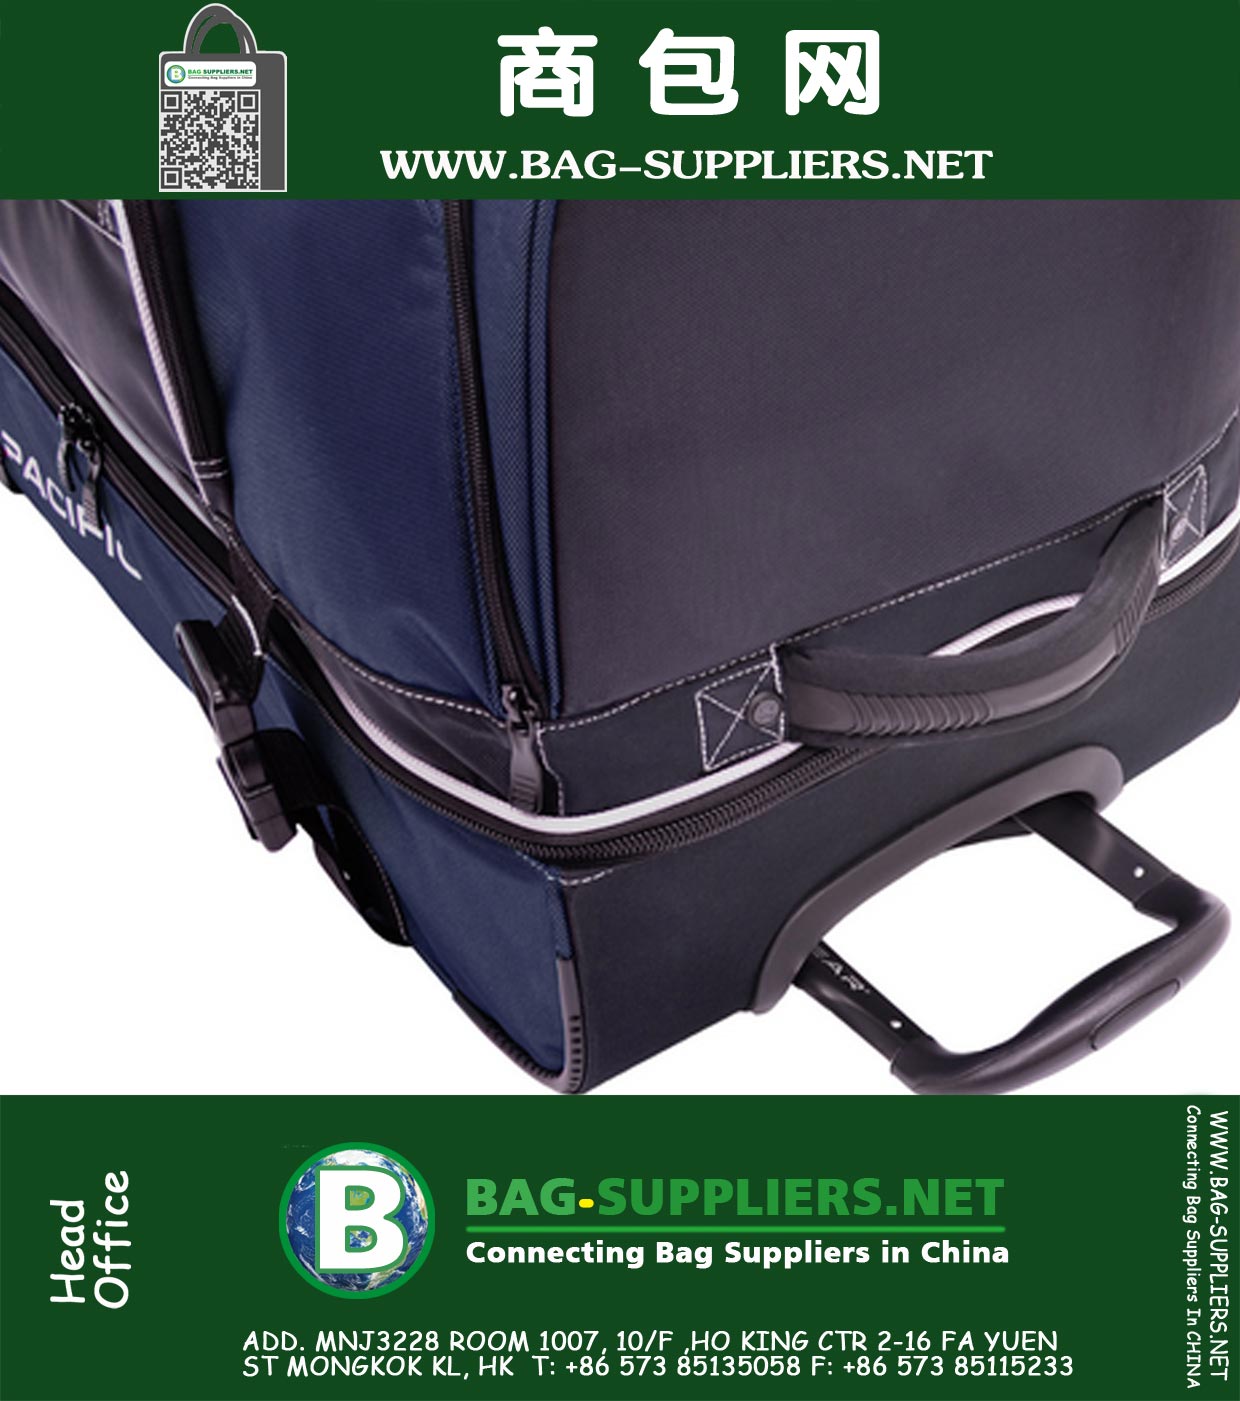 30 Inch Drop-bottom Rolling Upright Duffel Bag